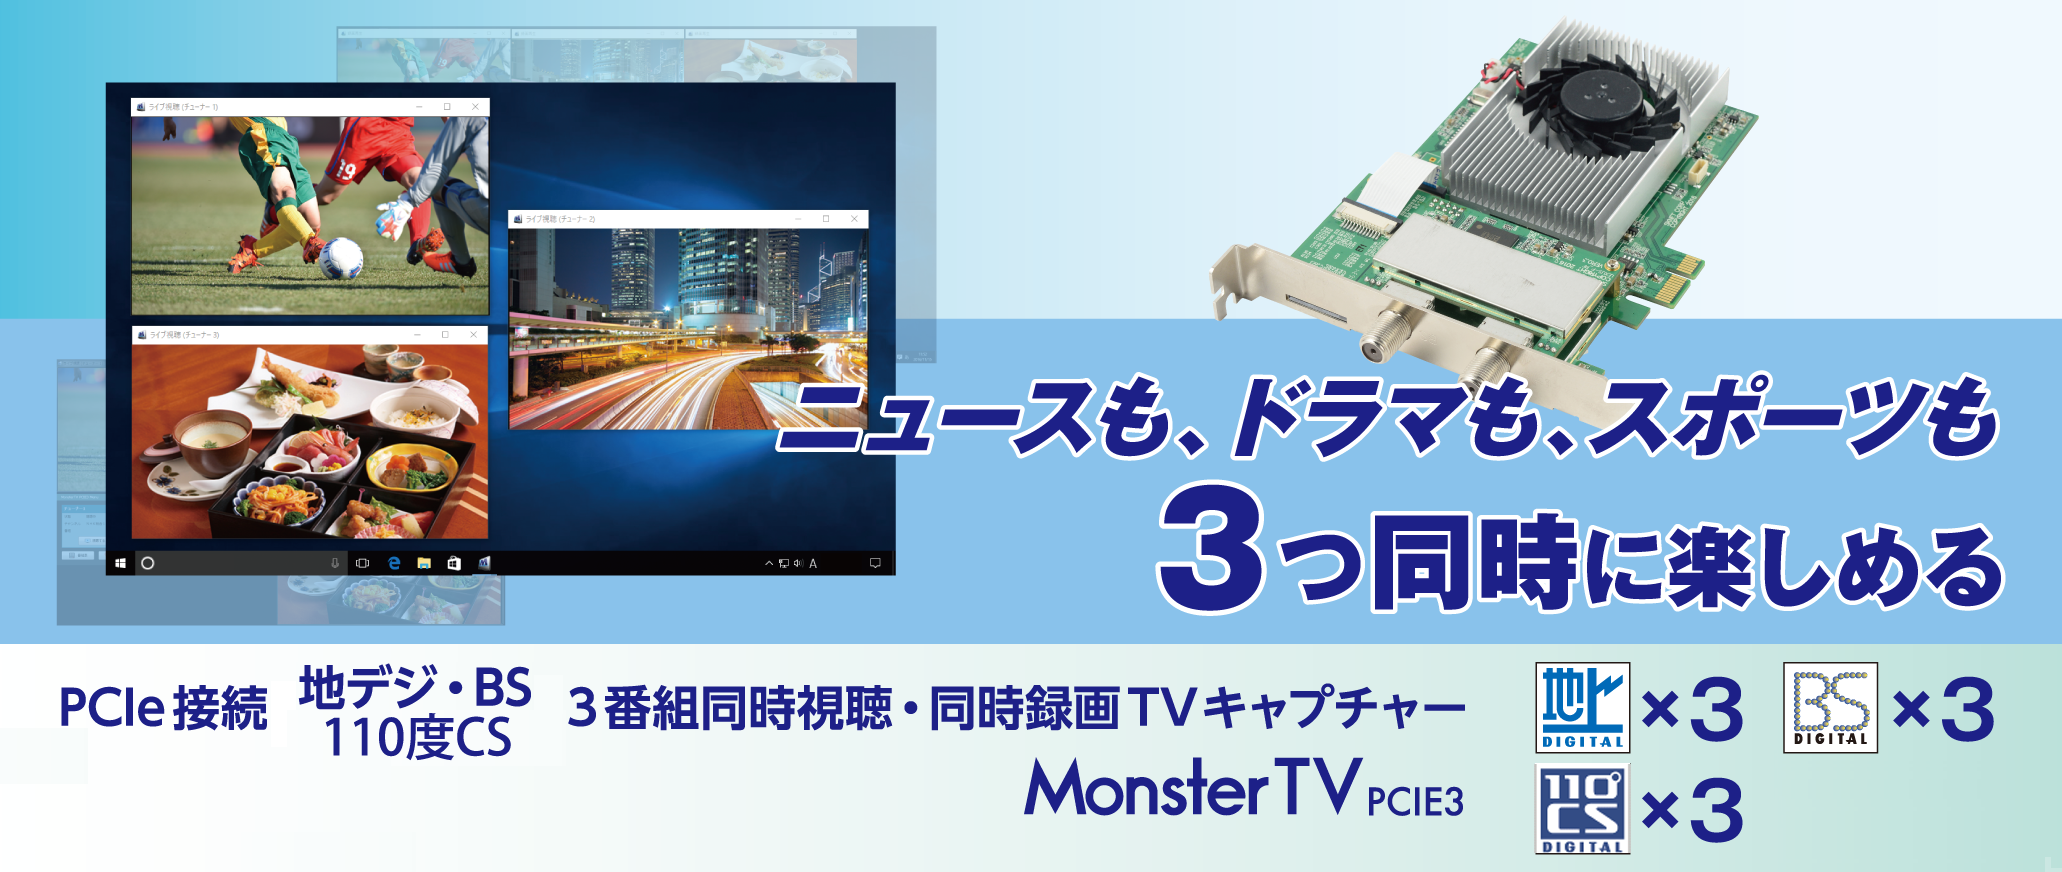 MonsterTV PCIE3